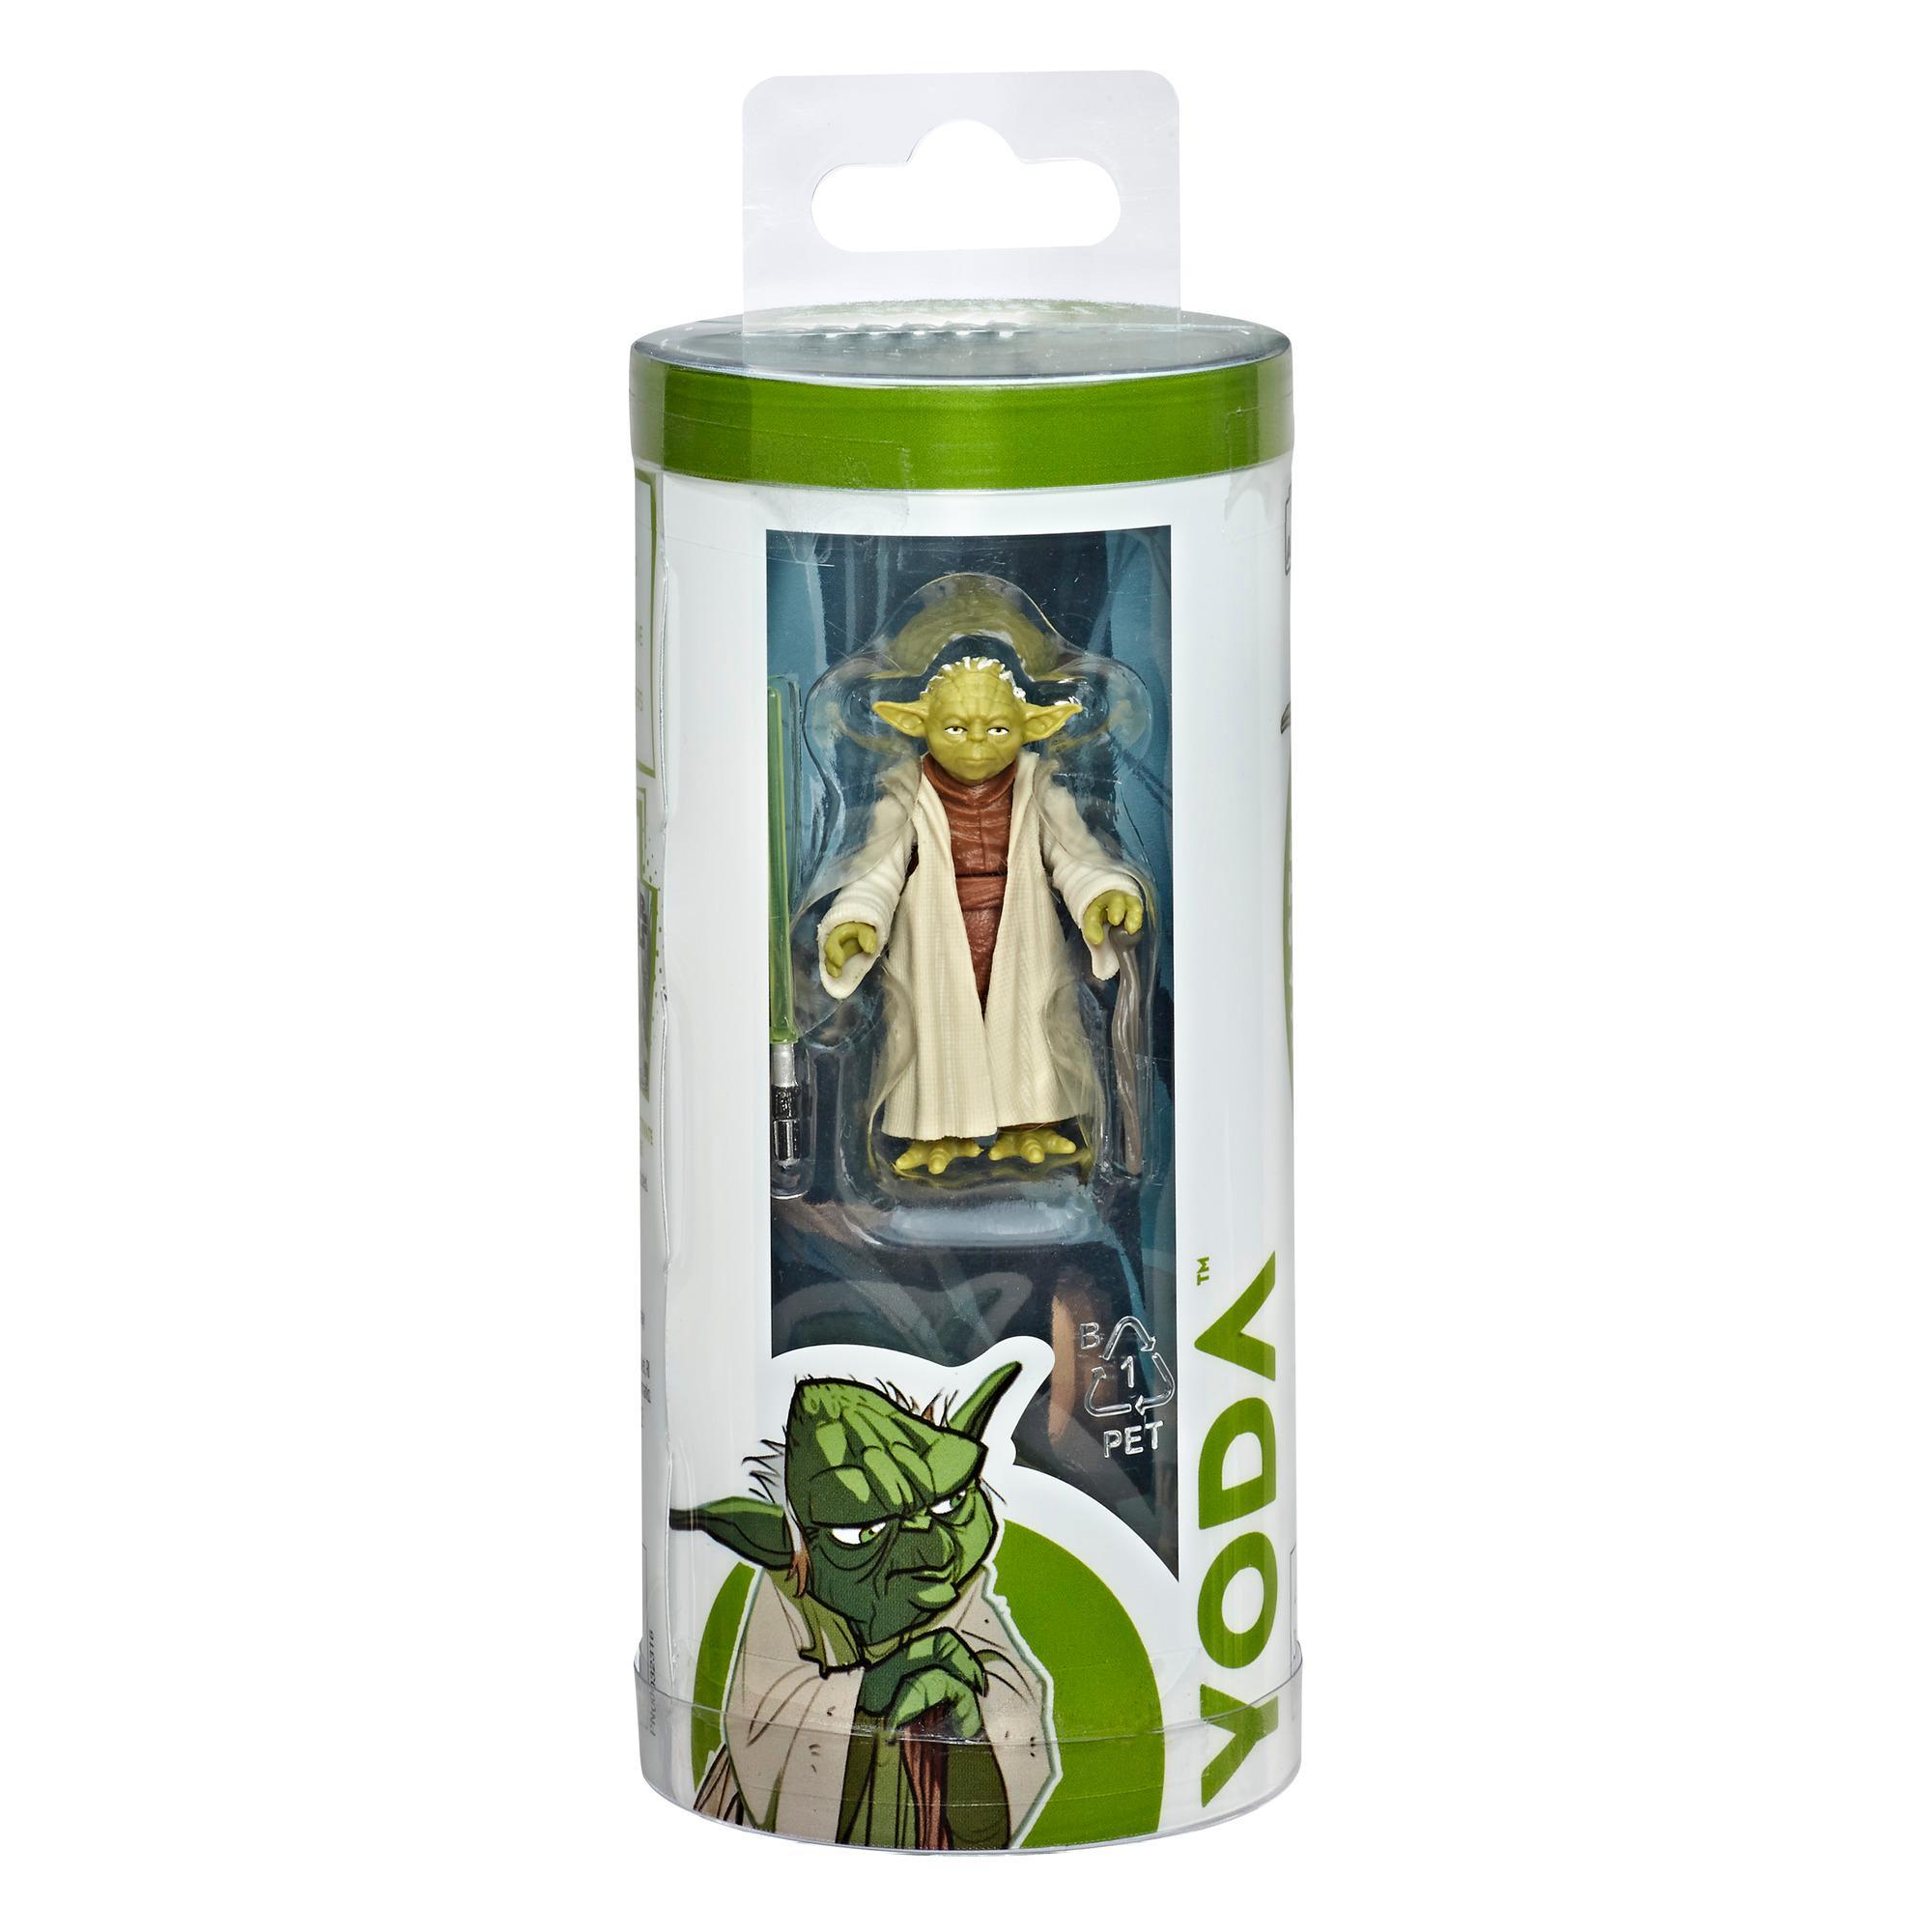 Star Wars Galaxy of Adventures Yoda Figure and Mini Comic product thumbnail 1